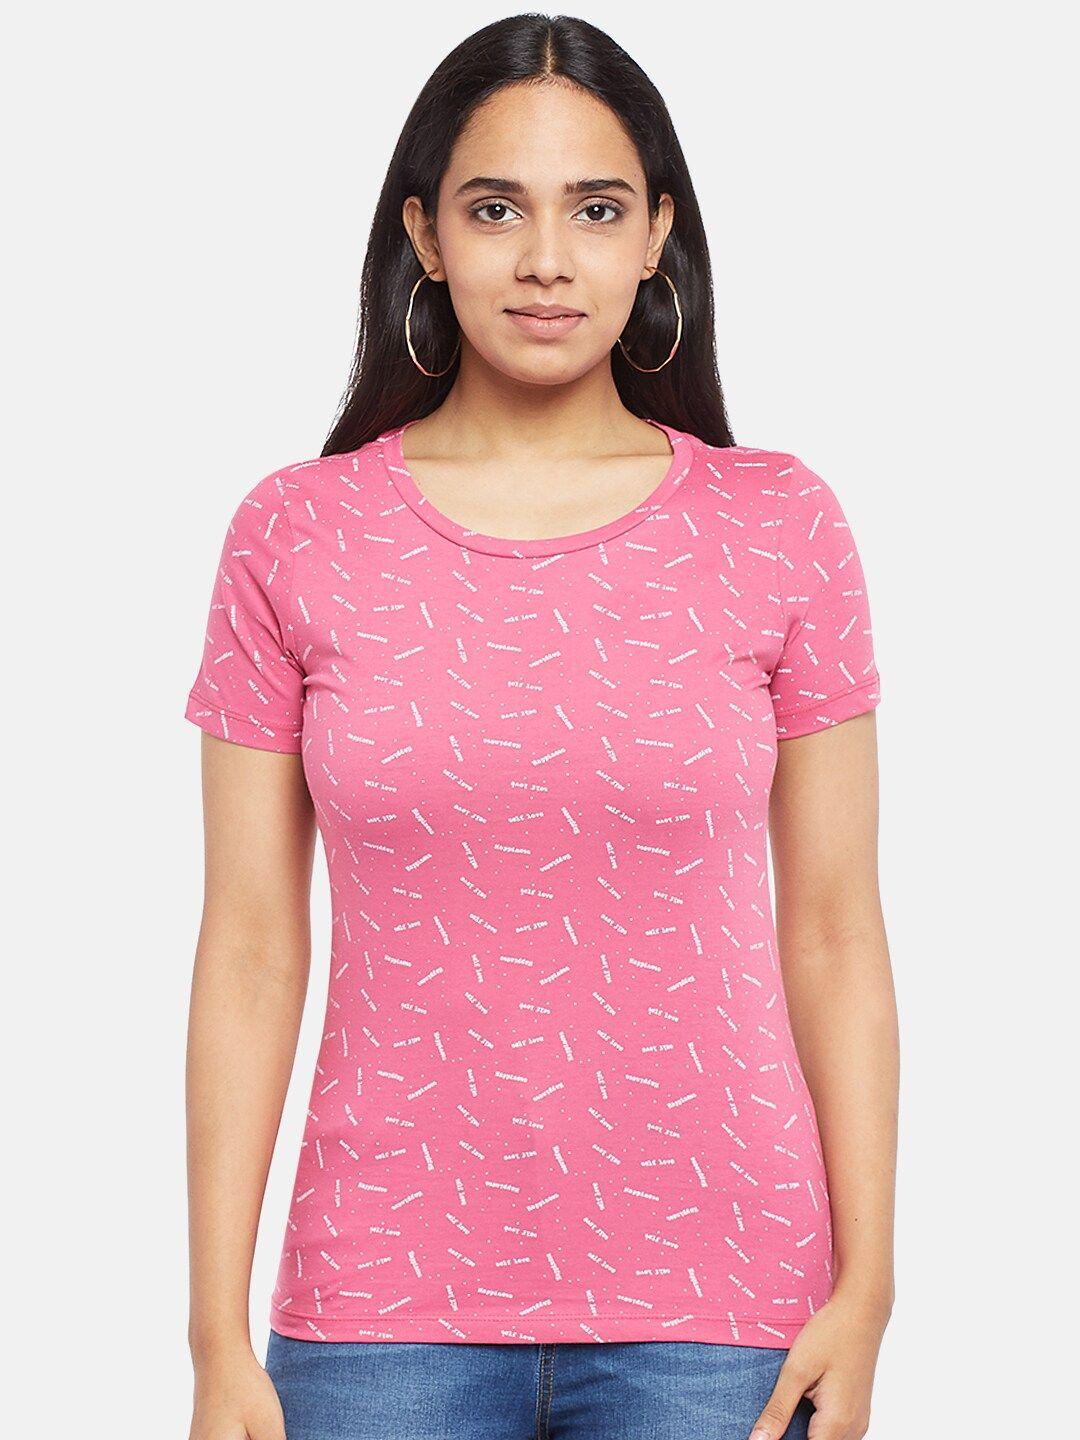 honey by pantaloons women pink printed t-shirt